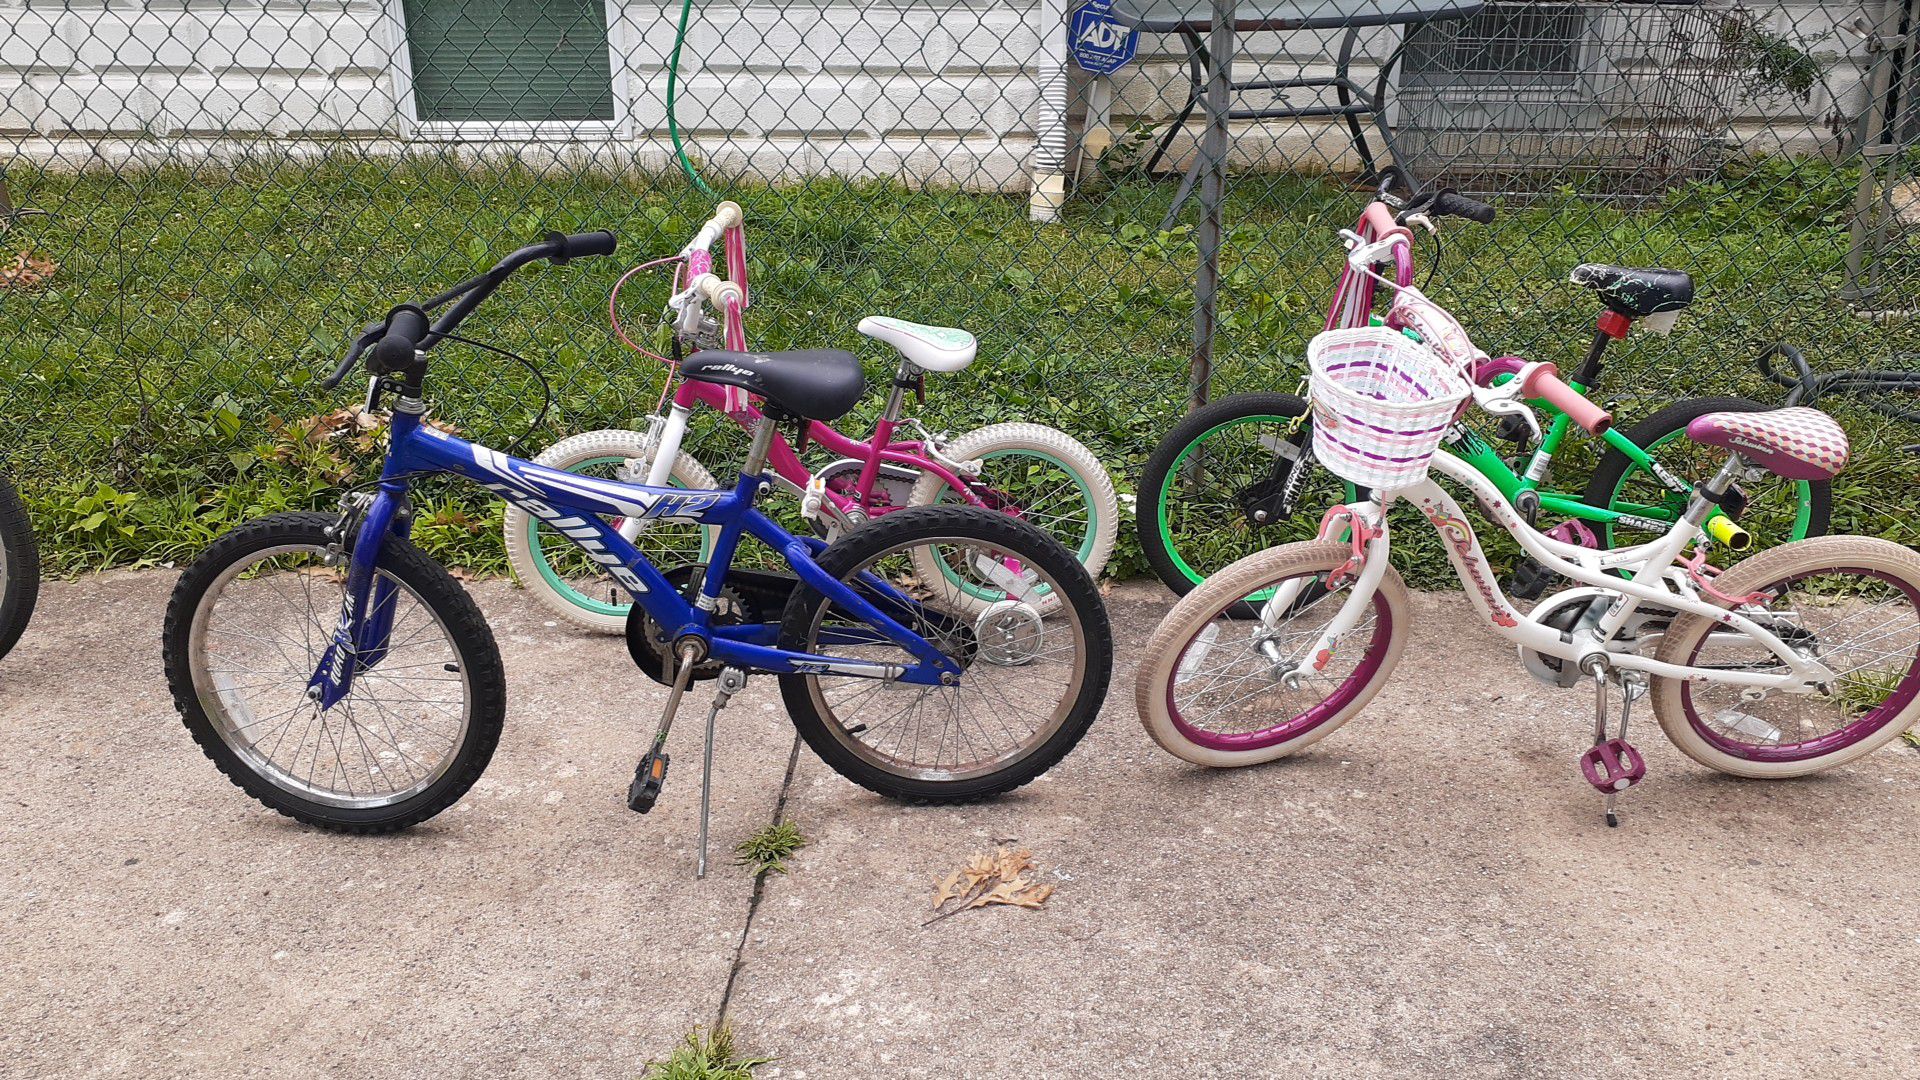 Kids bike for sale the small pink one Schwinn bike the girls bike is a swim two boys bike one is a rally the blue one the green one is a Kent